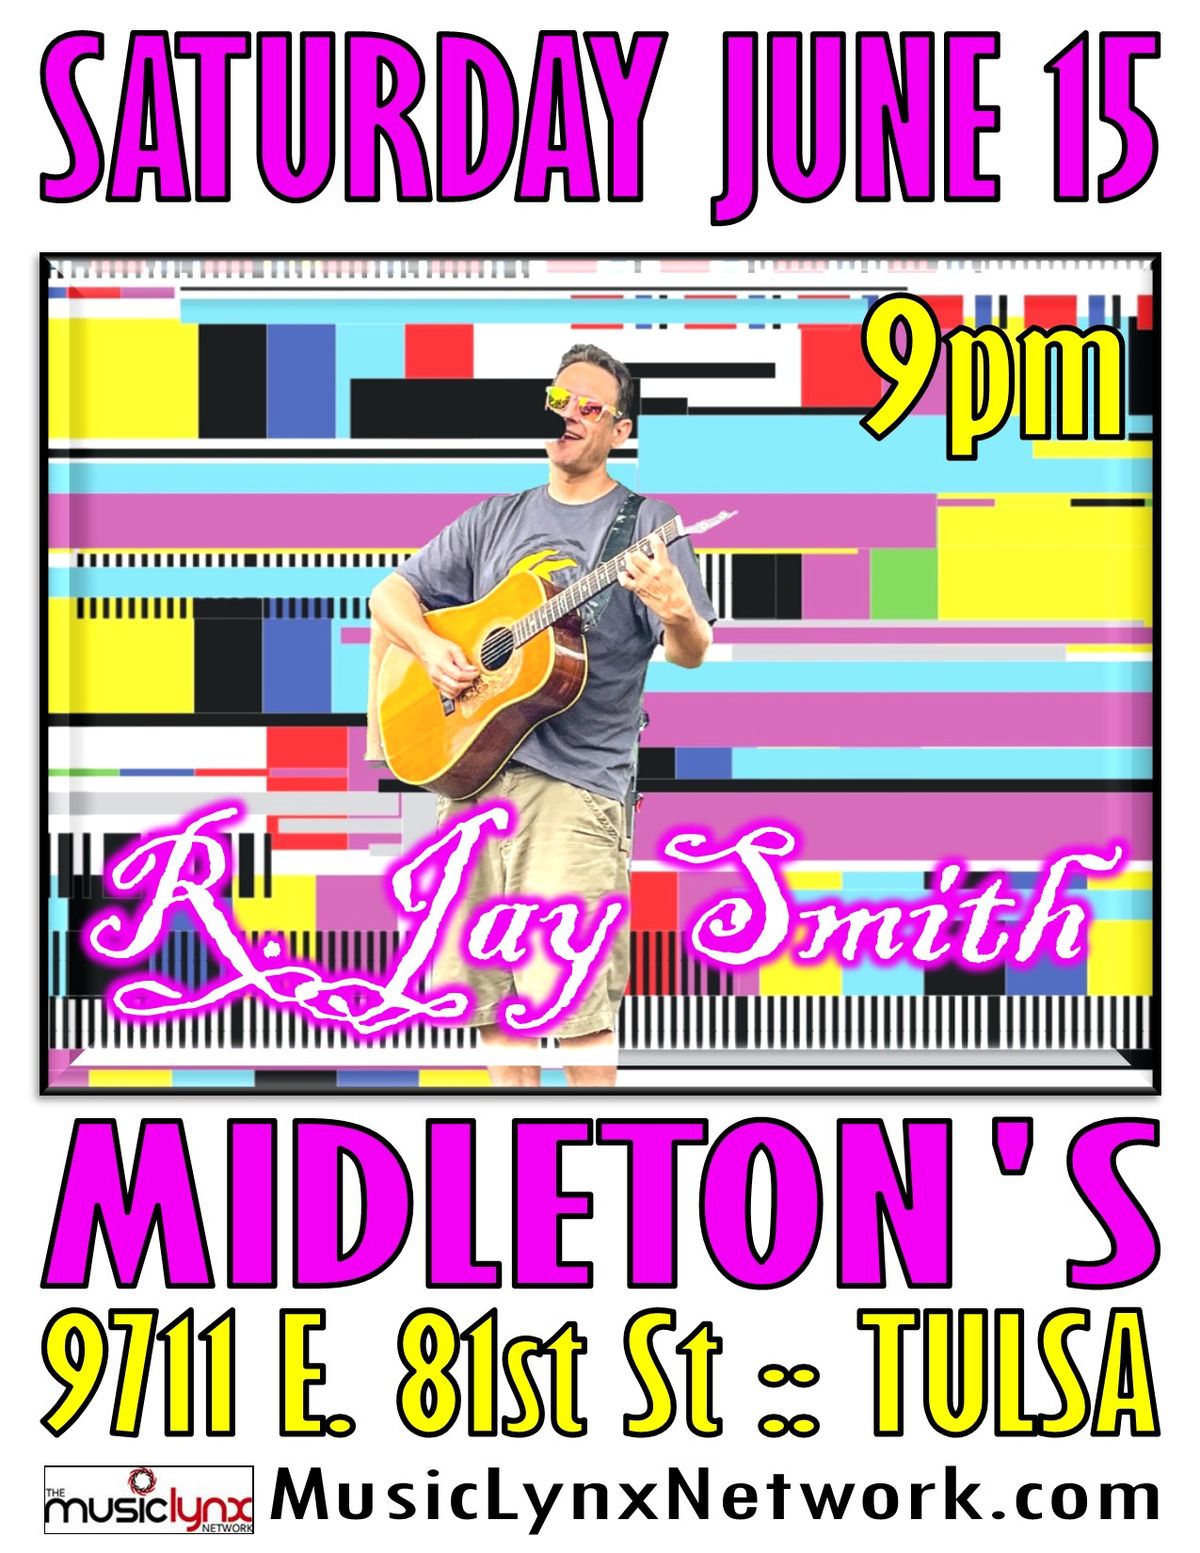 R. JAY SMITH Saturday at Midleton's